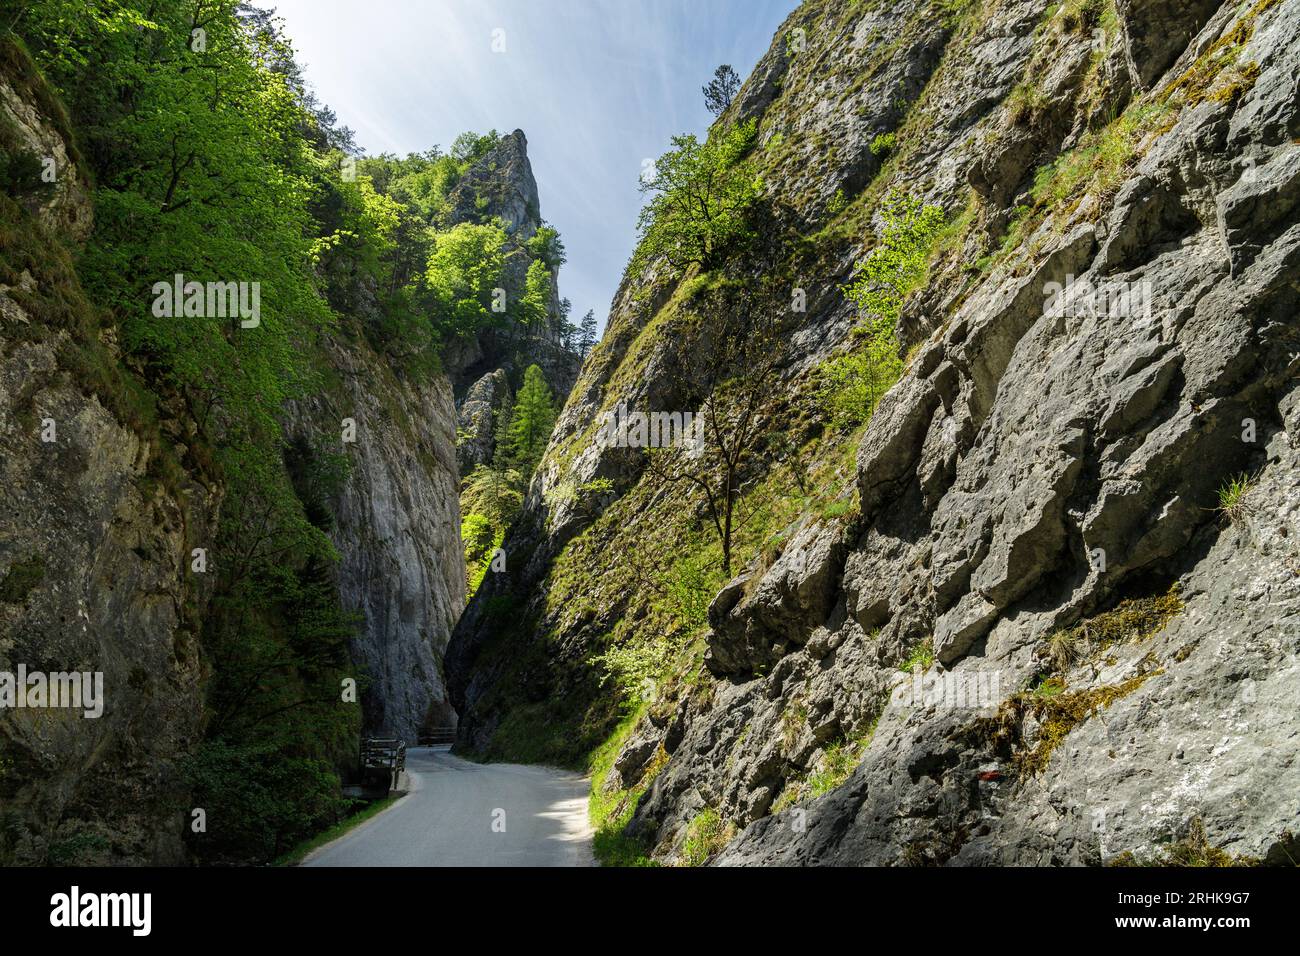 Curvy road between steep rocks of Maninska tiesnava gorge in Strazovske vrchy mountains, Slovakia. Sunny spring day. Stock Photo